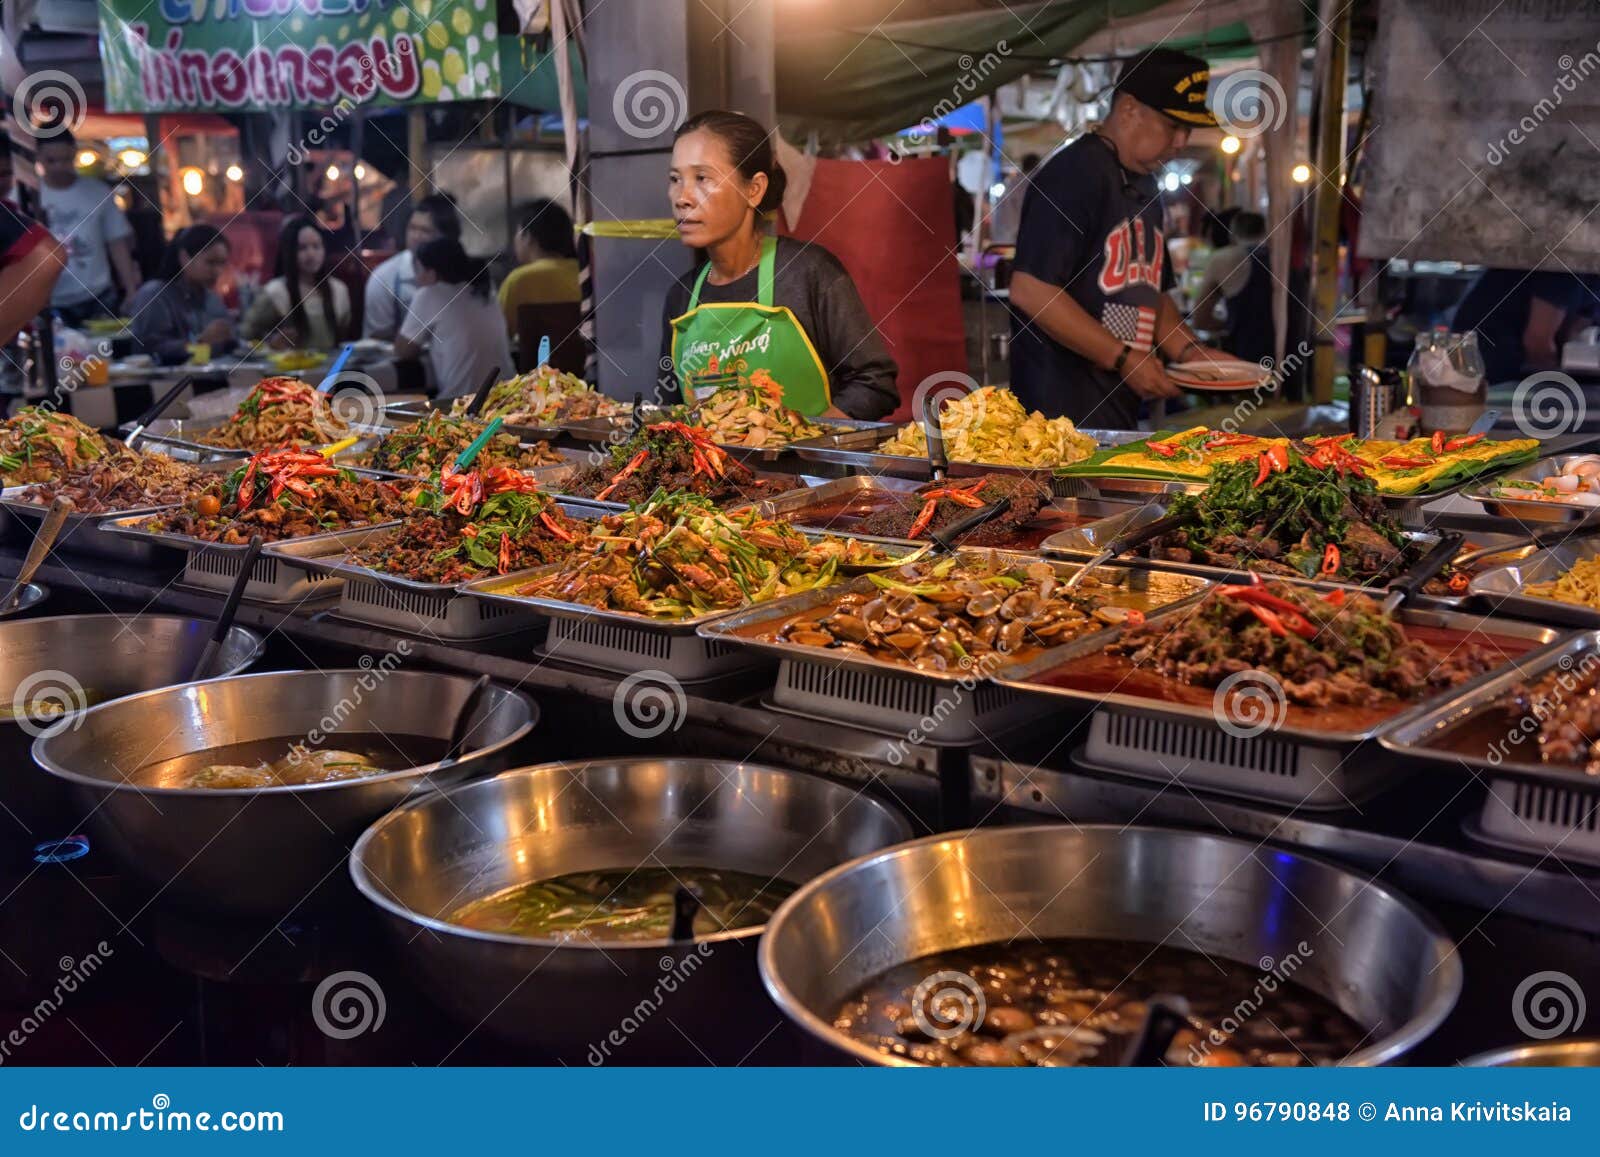 Thai streets. Тайская еда Паттайя. Стрит фуд Тайланд. Ночной рынок Пратамнак Паттайя. Бангкок стрит фуд.